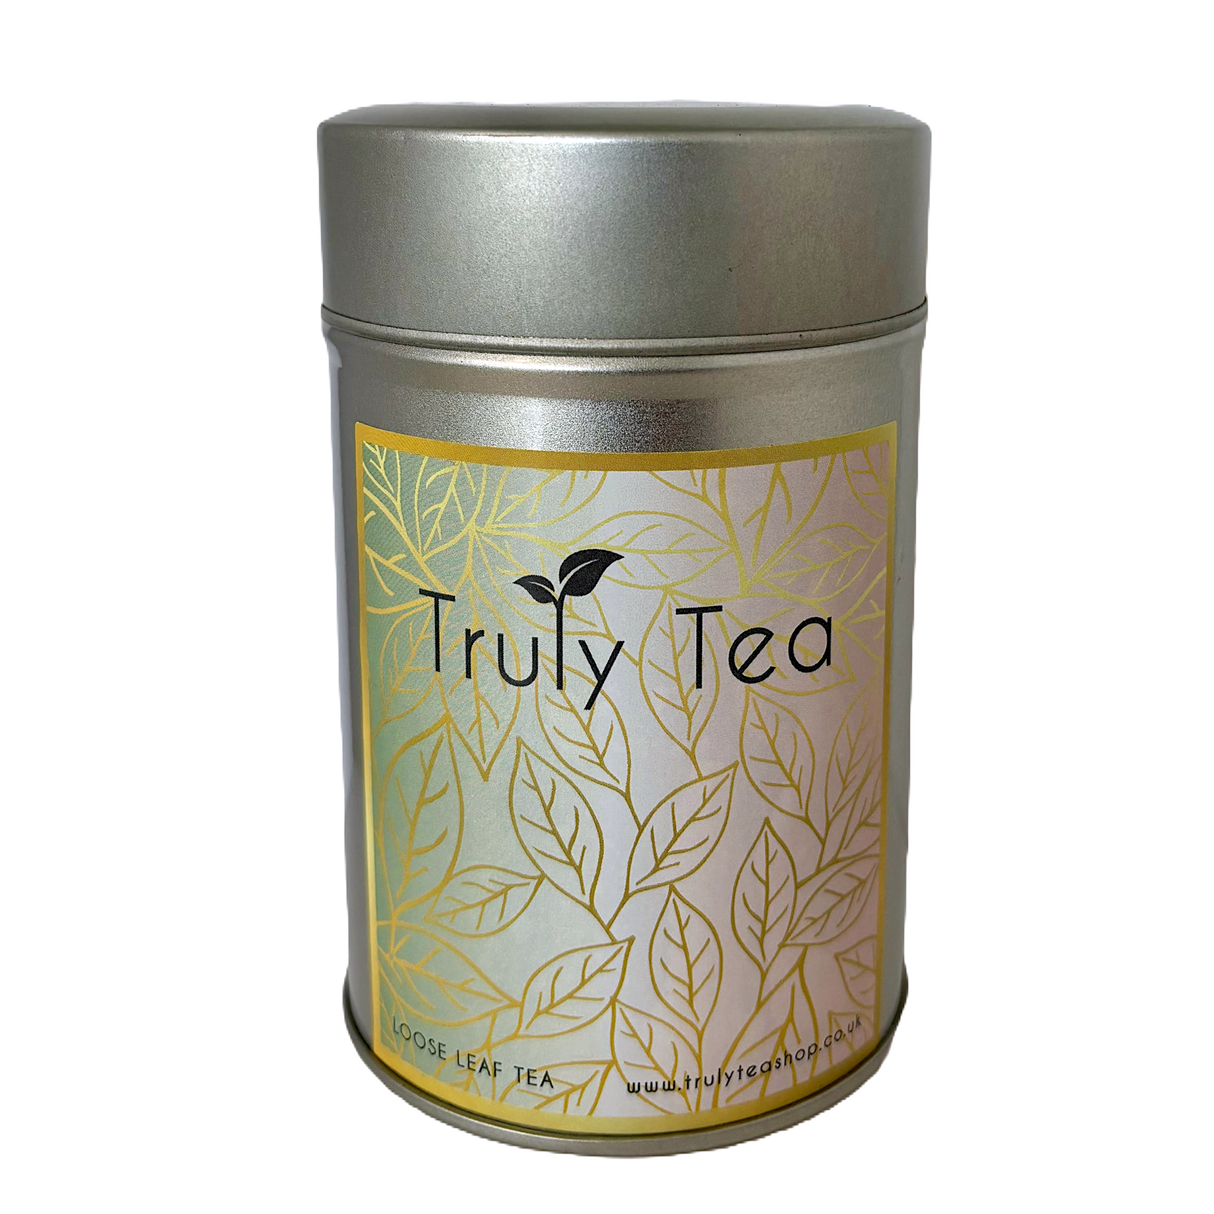 Fujian Curly Green Tea